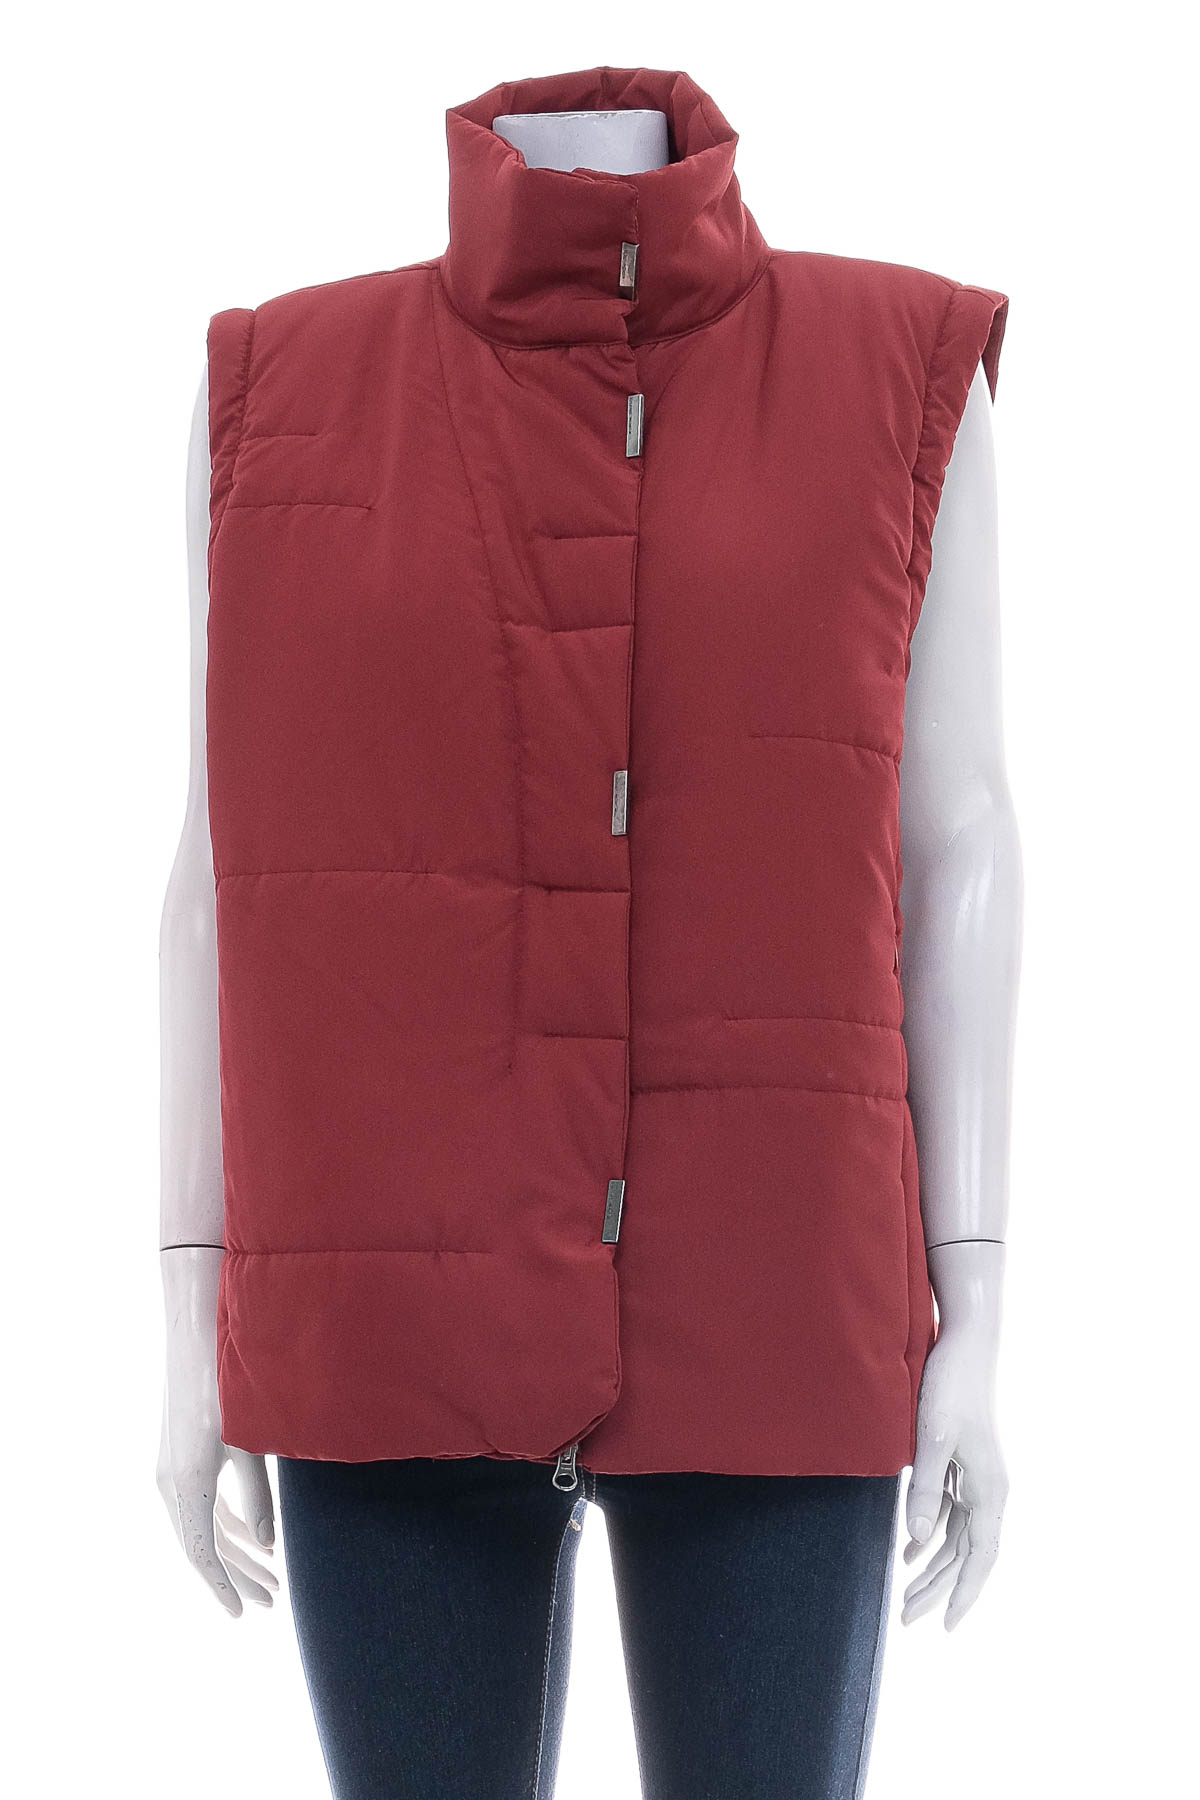 Women's vest - Kitaro - 0